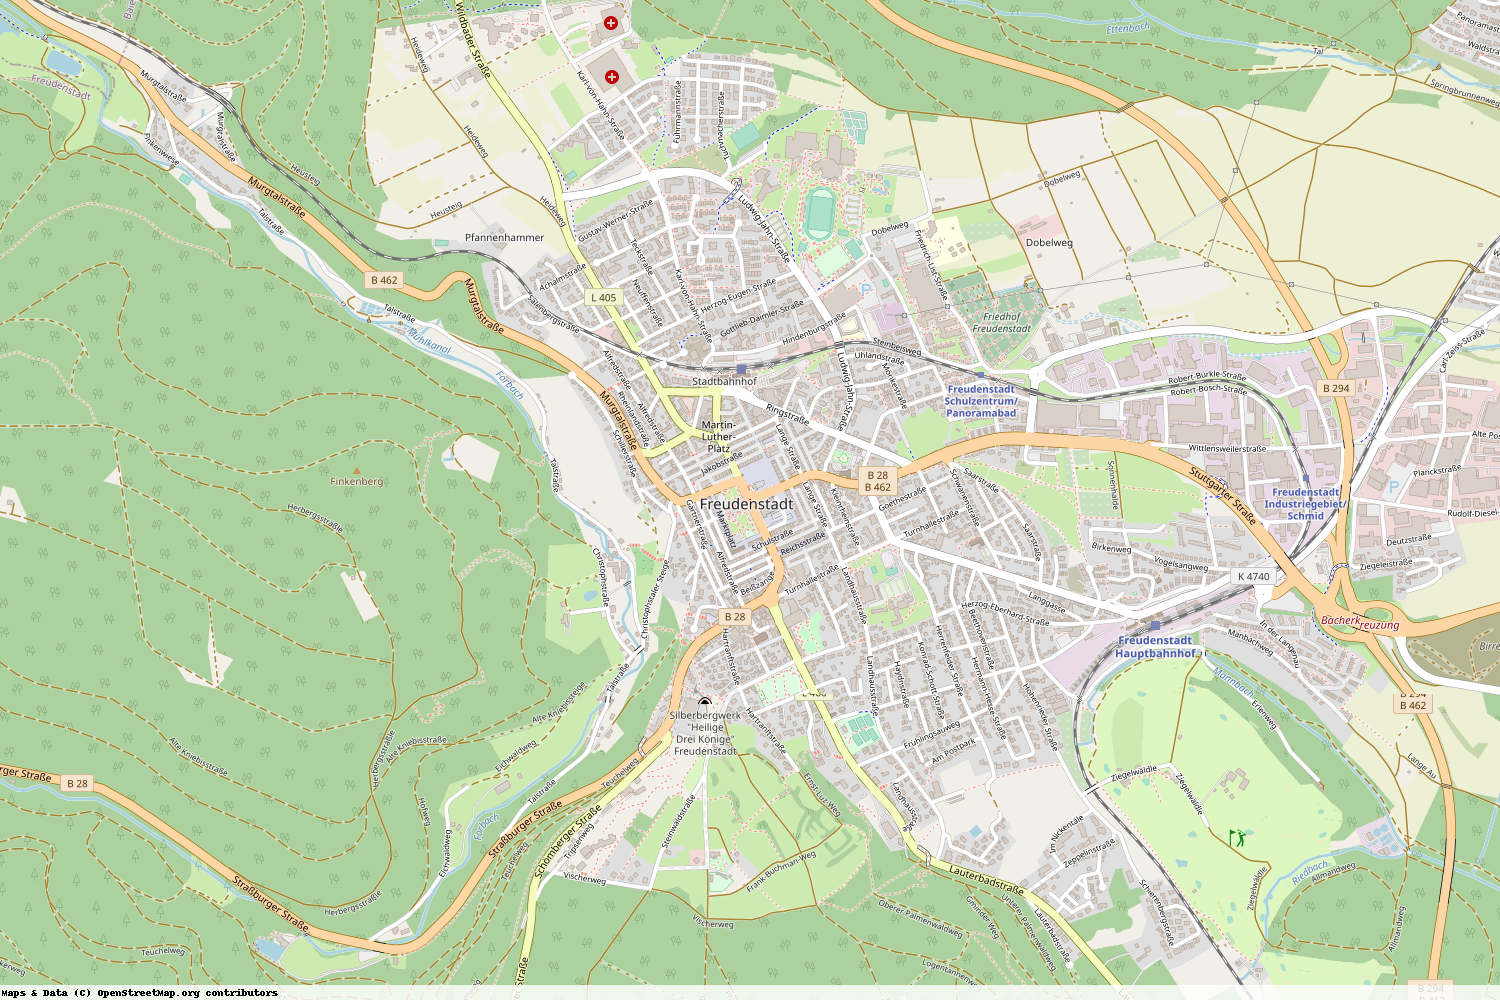 Ist gerade Stromausfall in Baden-Württemberg - Freudenstadt - Freudenstadt?